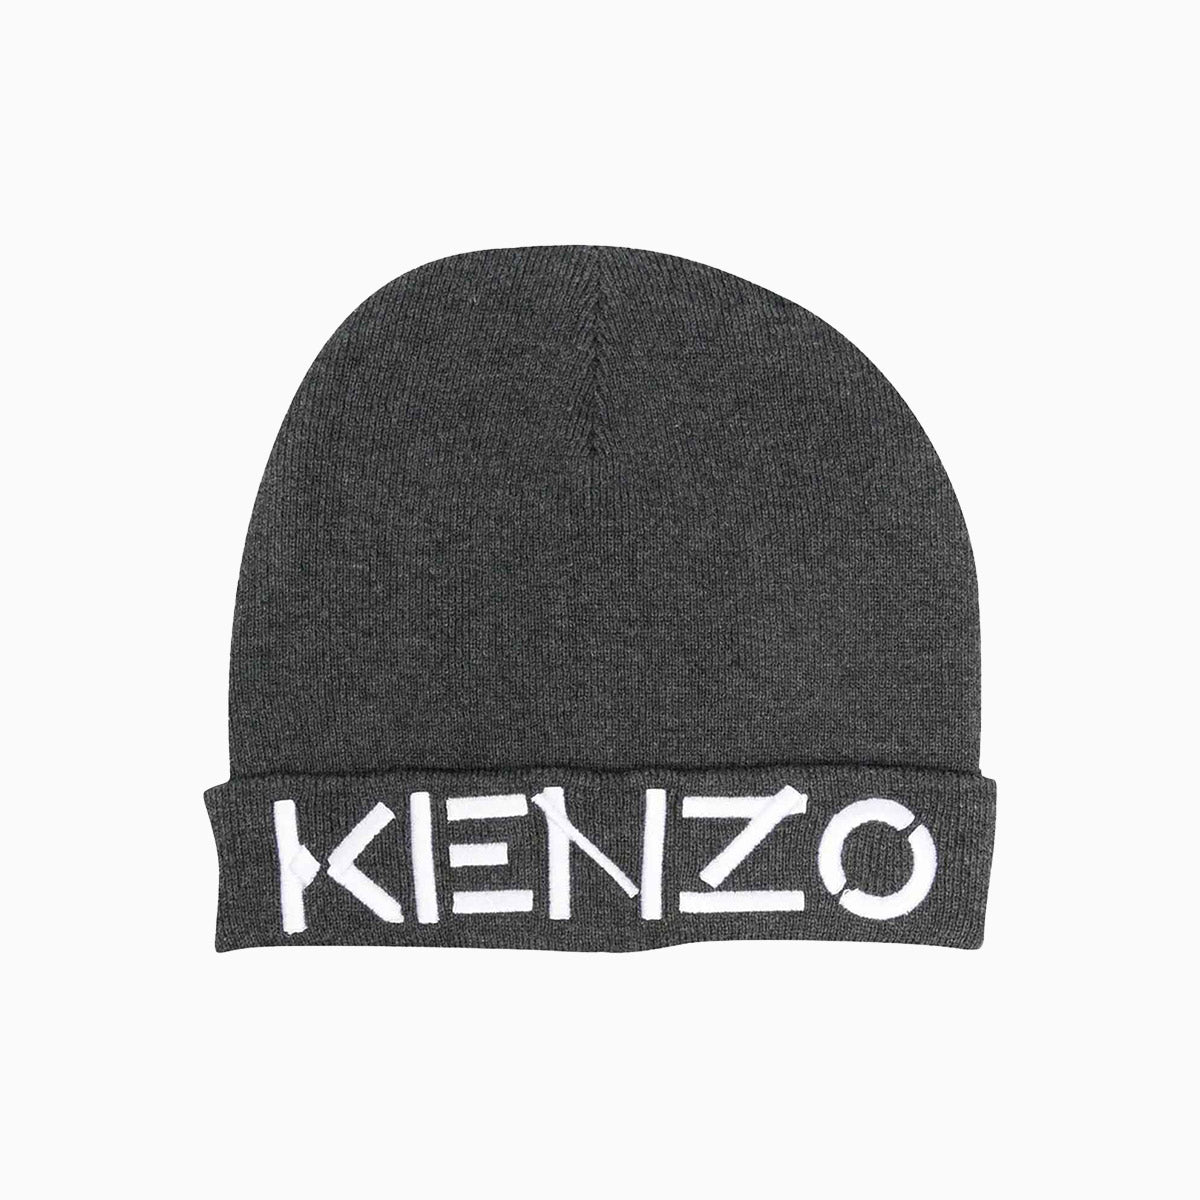 kenzo-kids-pull-on-beanie-hat-k51018-065